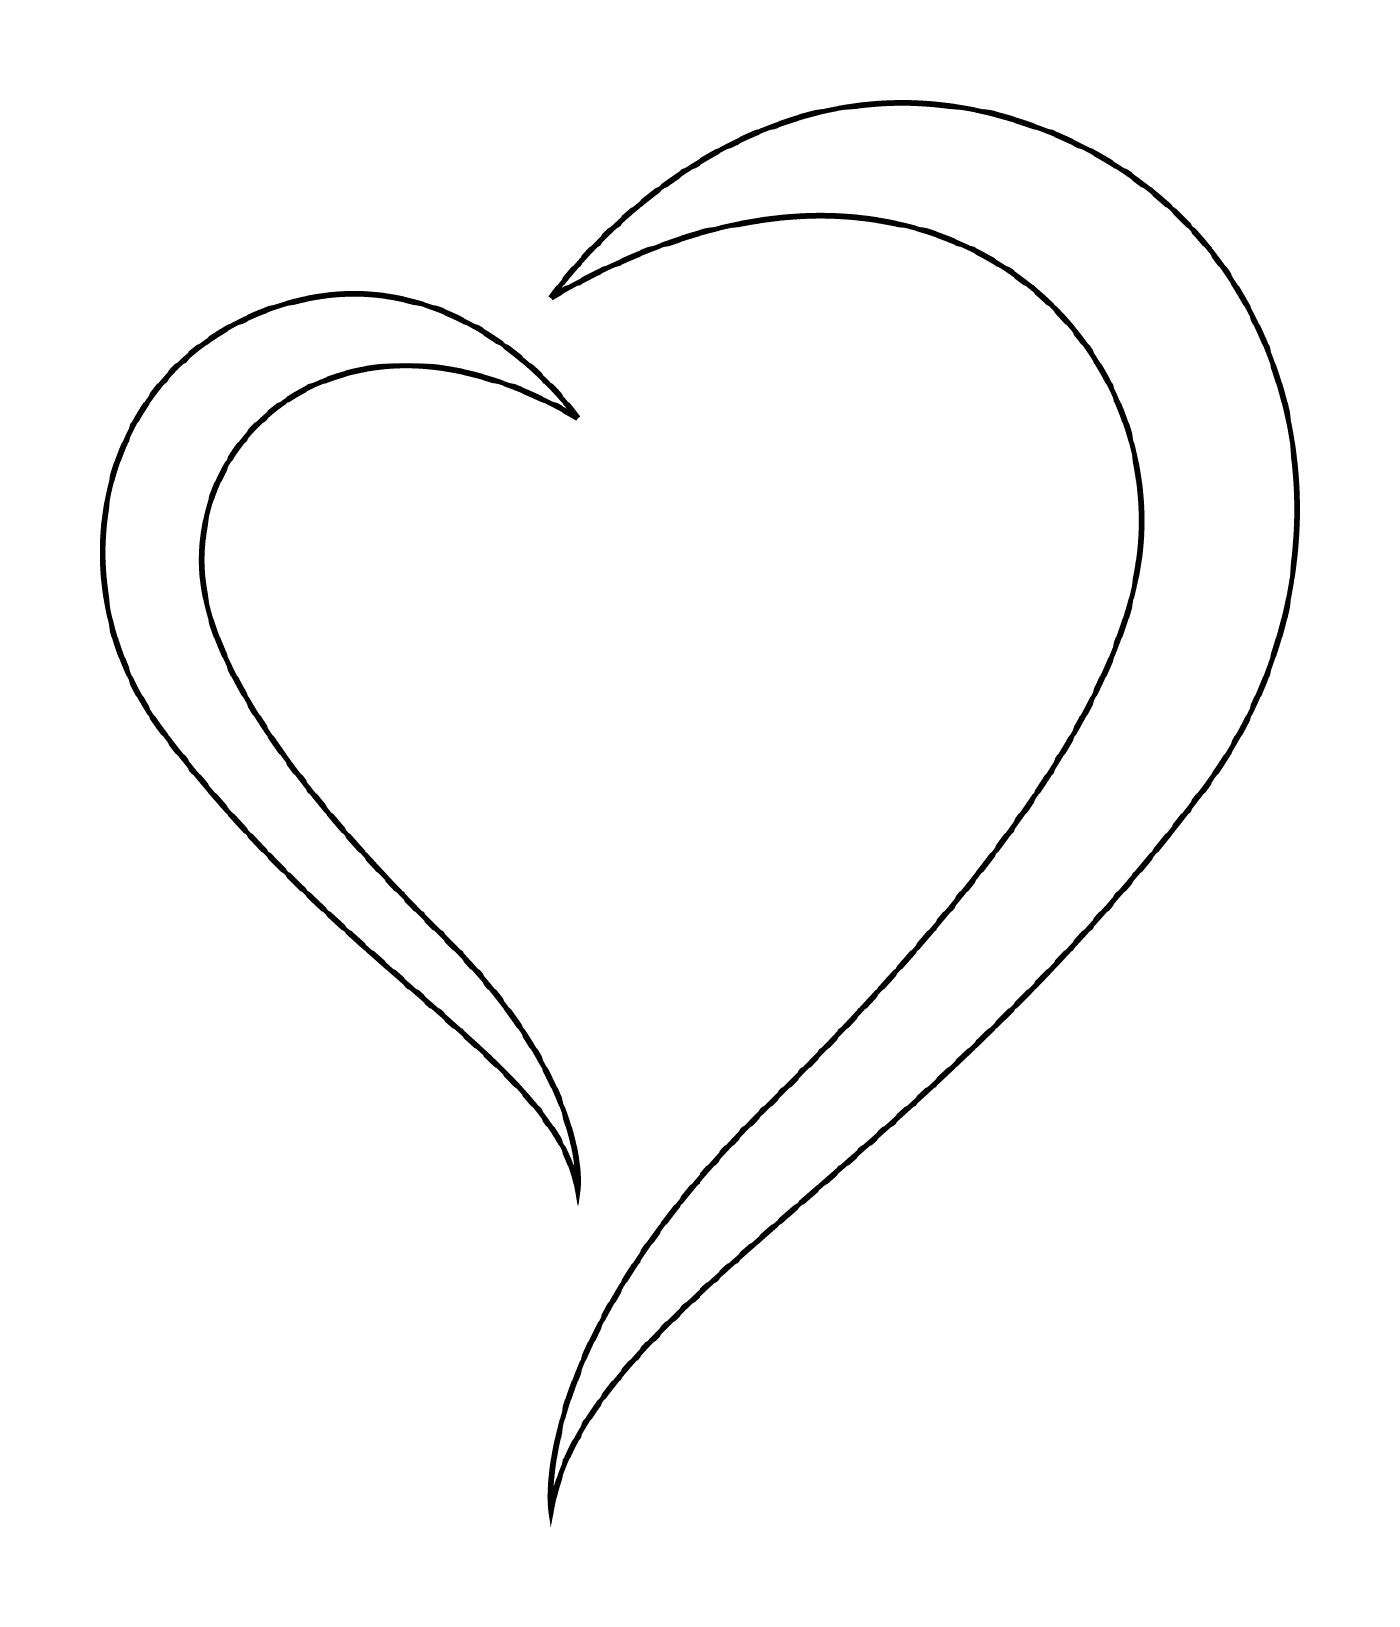  Stylish design of an elegant heart 